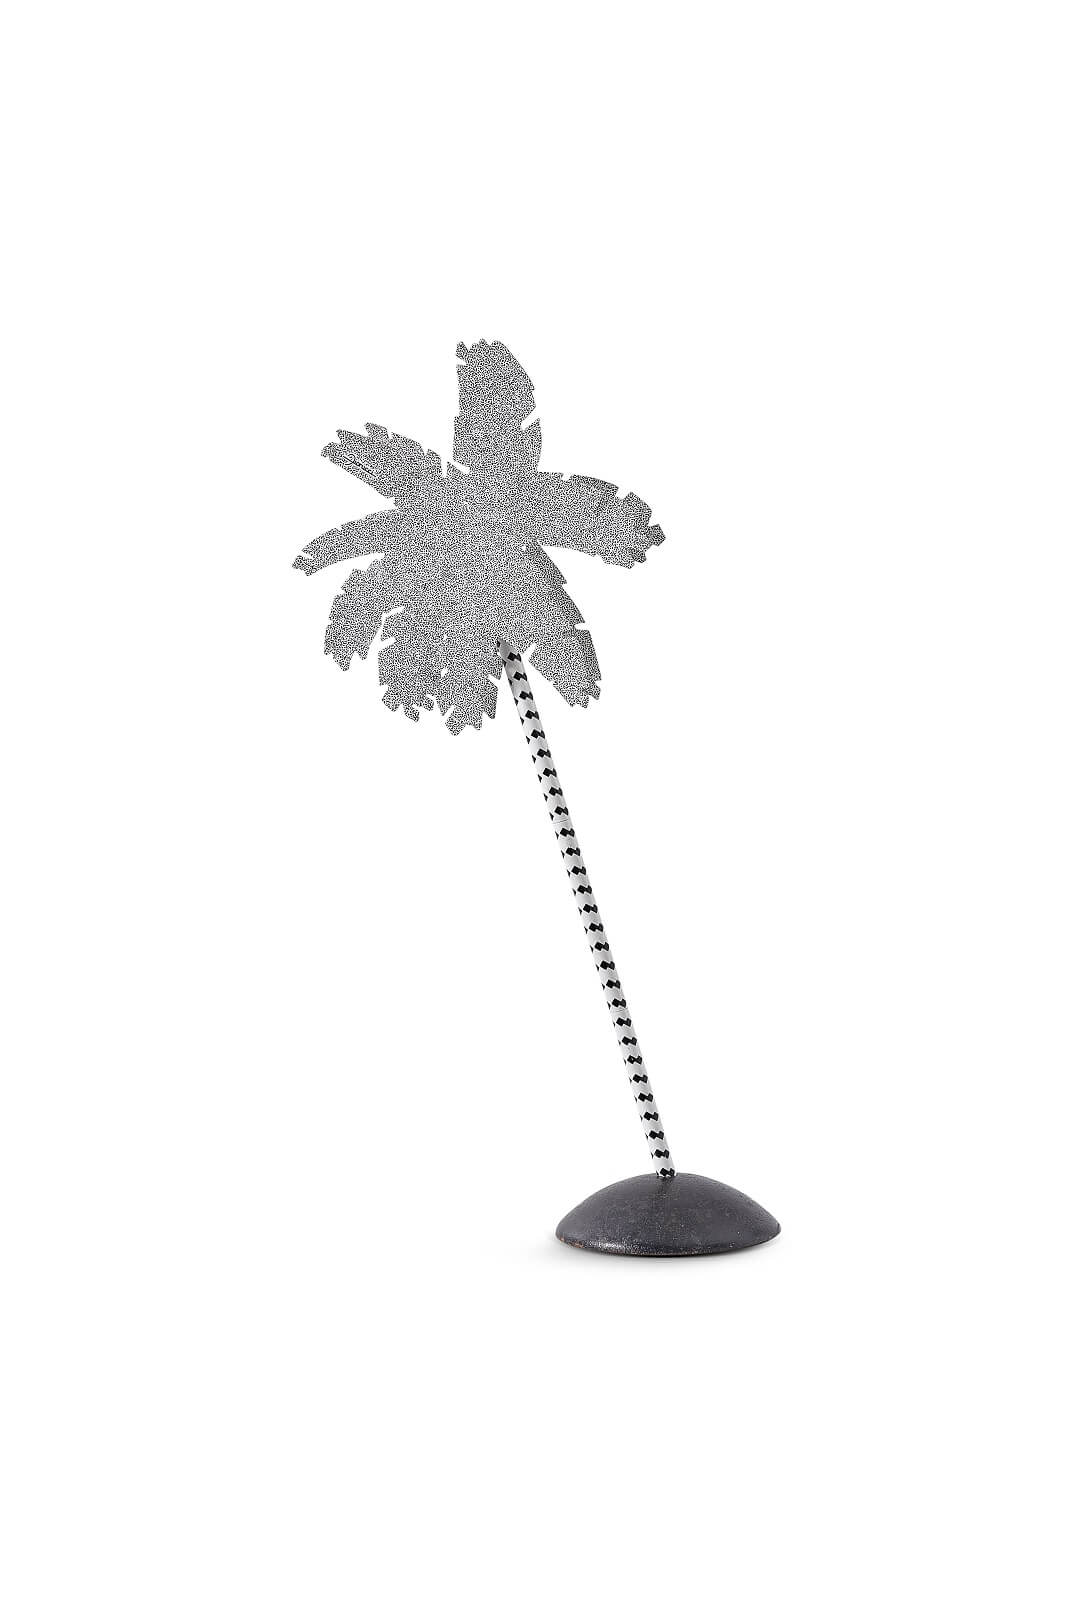 Настольная лампа «Caribe palm tree», Ettore Sottsass for Fiorucci - продажа в Москве